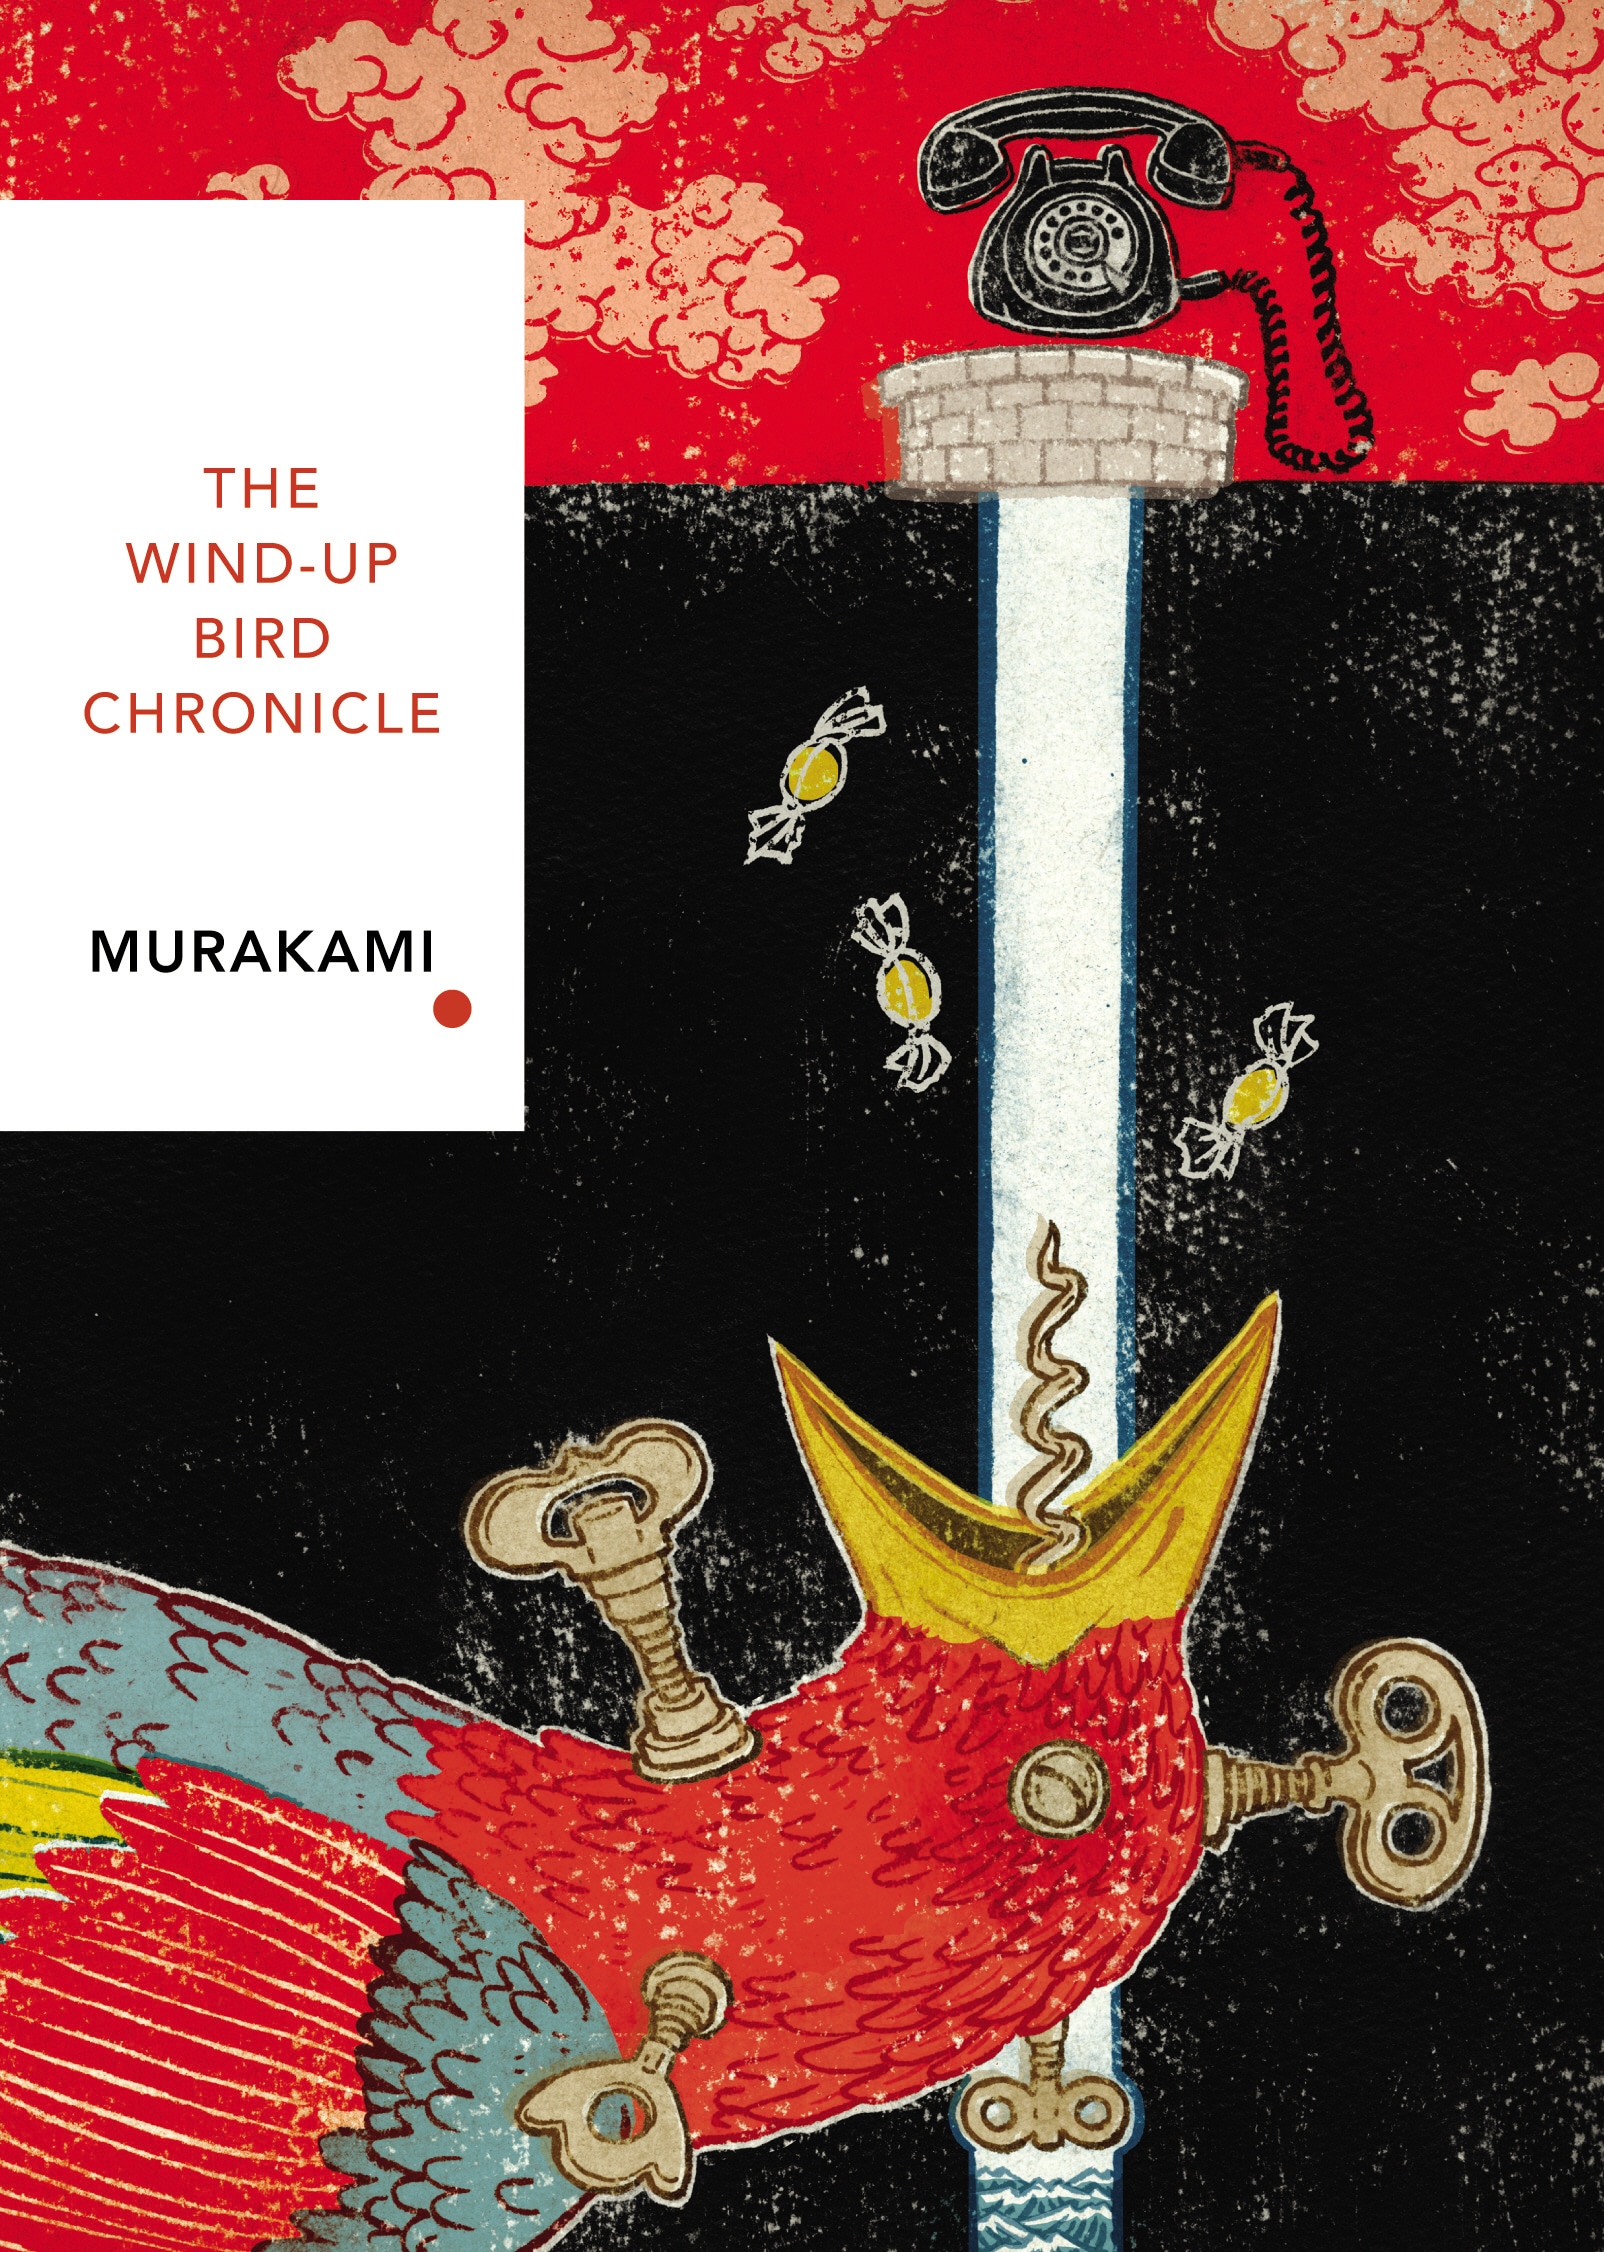 Book “The Wind-Up Bird Chronicle (Vintage Classics Japanese Series)” by Haruki Murakami — October 3, 2019